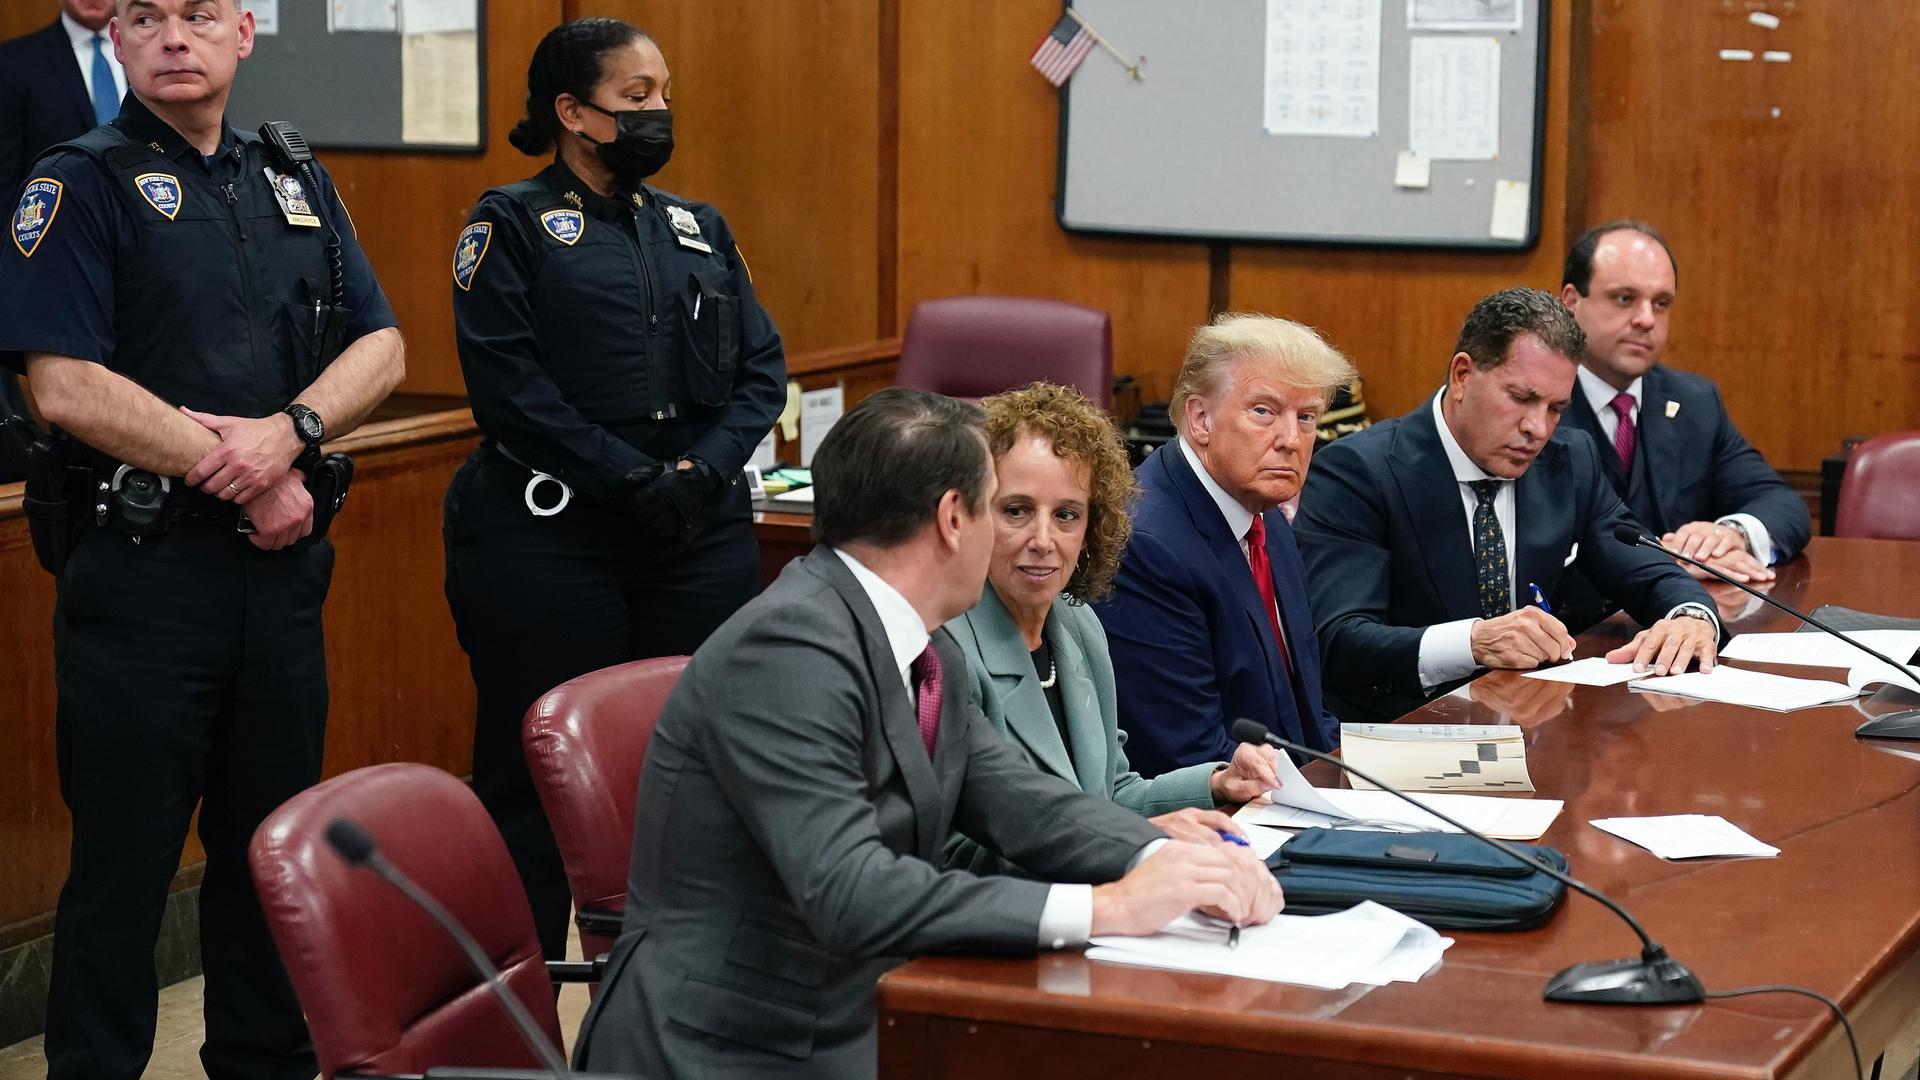 Trump in court